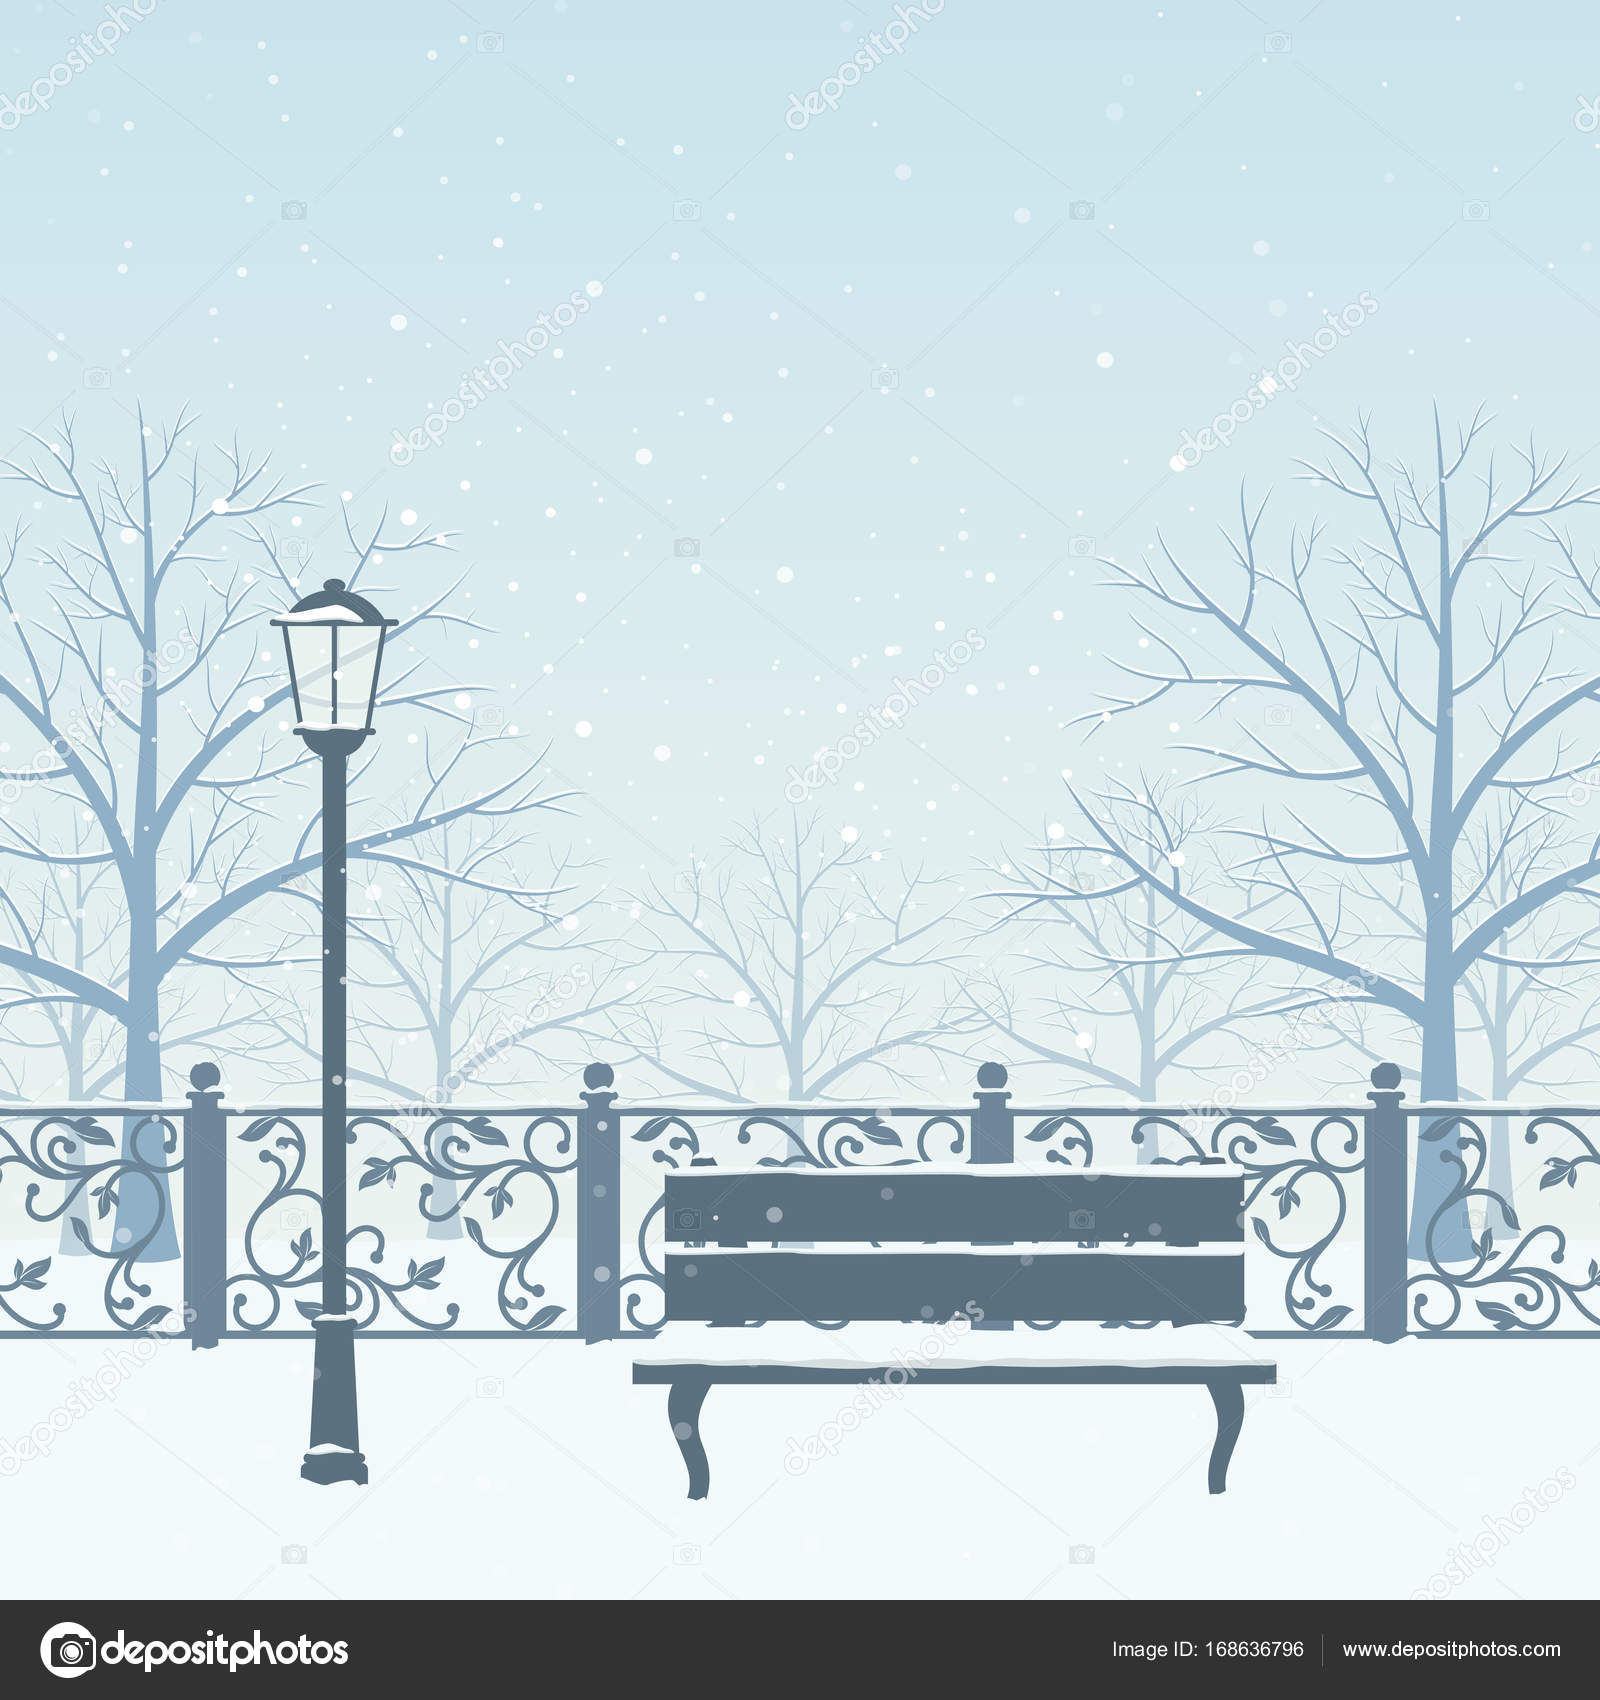 Snow Winter Park Vector Image By C Sanchesnet1 Gmail Com Vector Stock